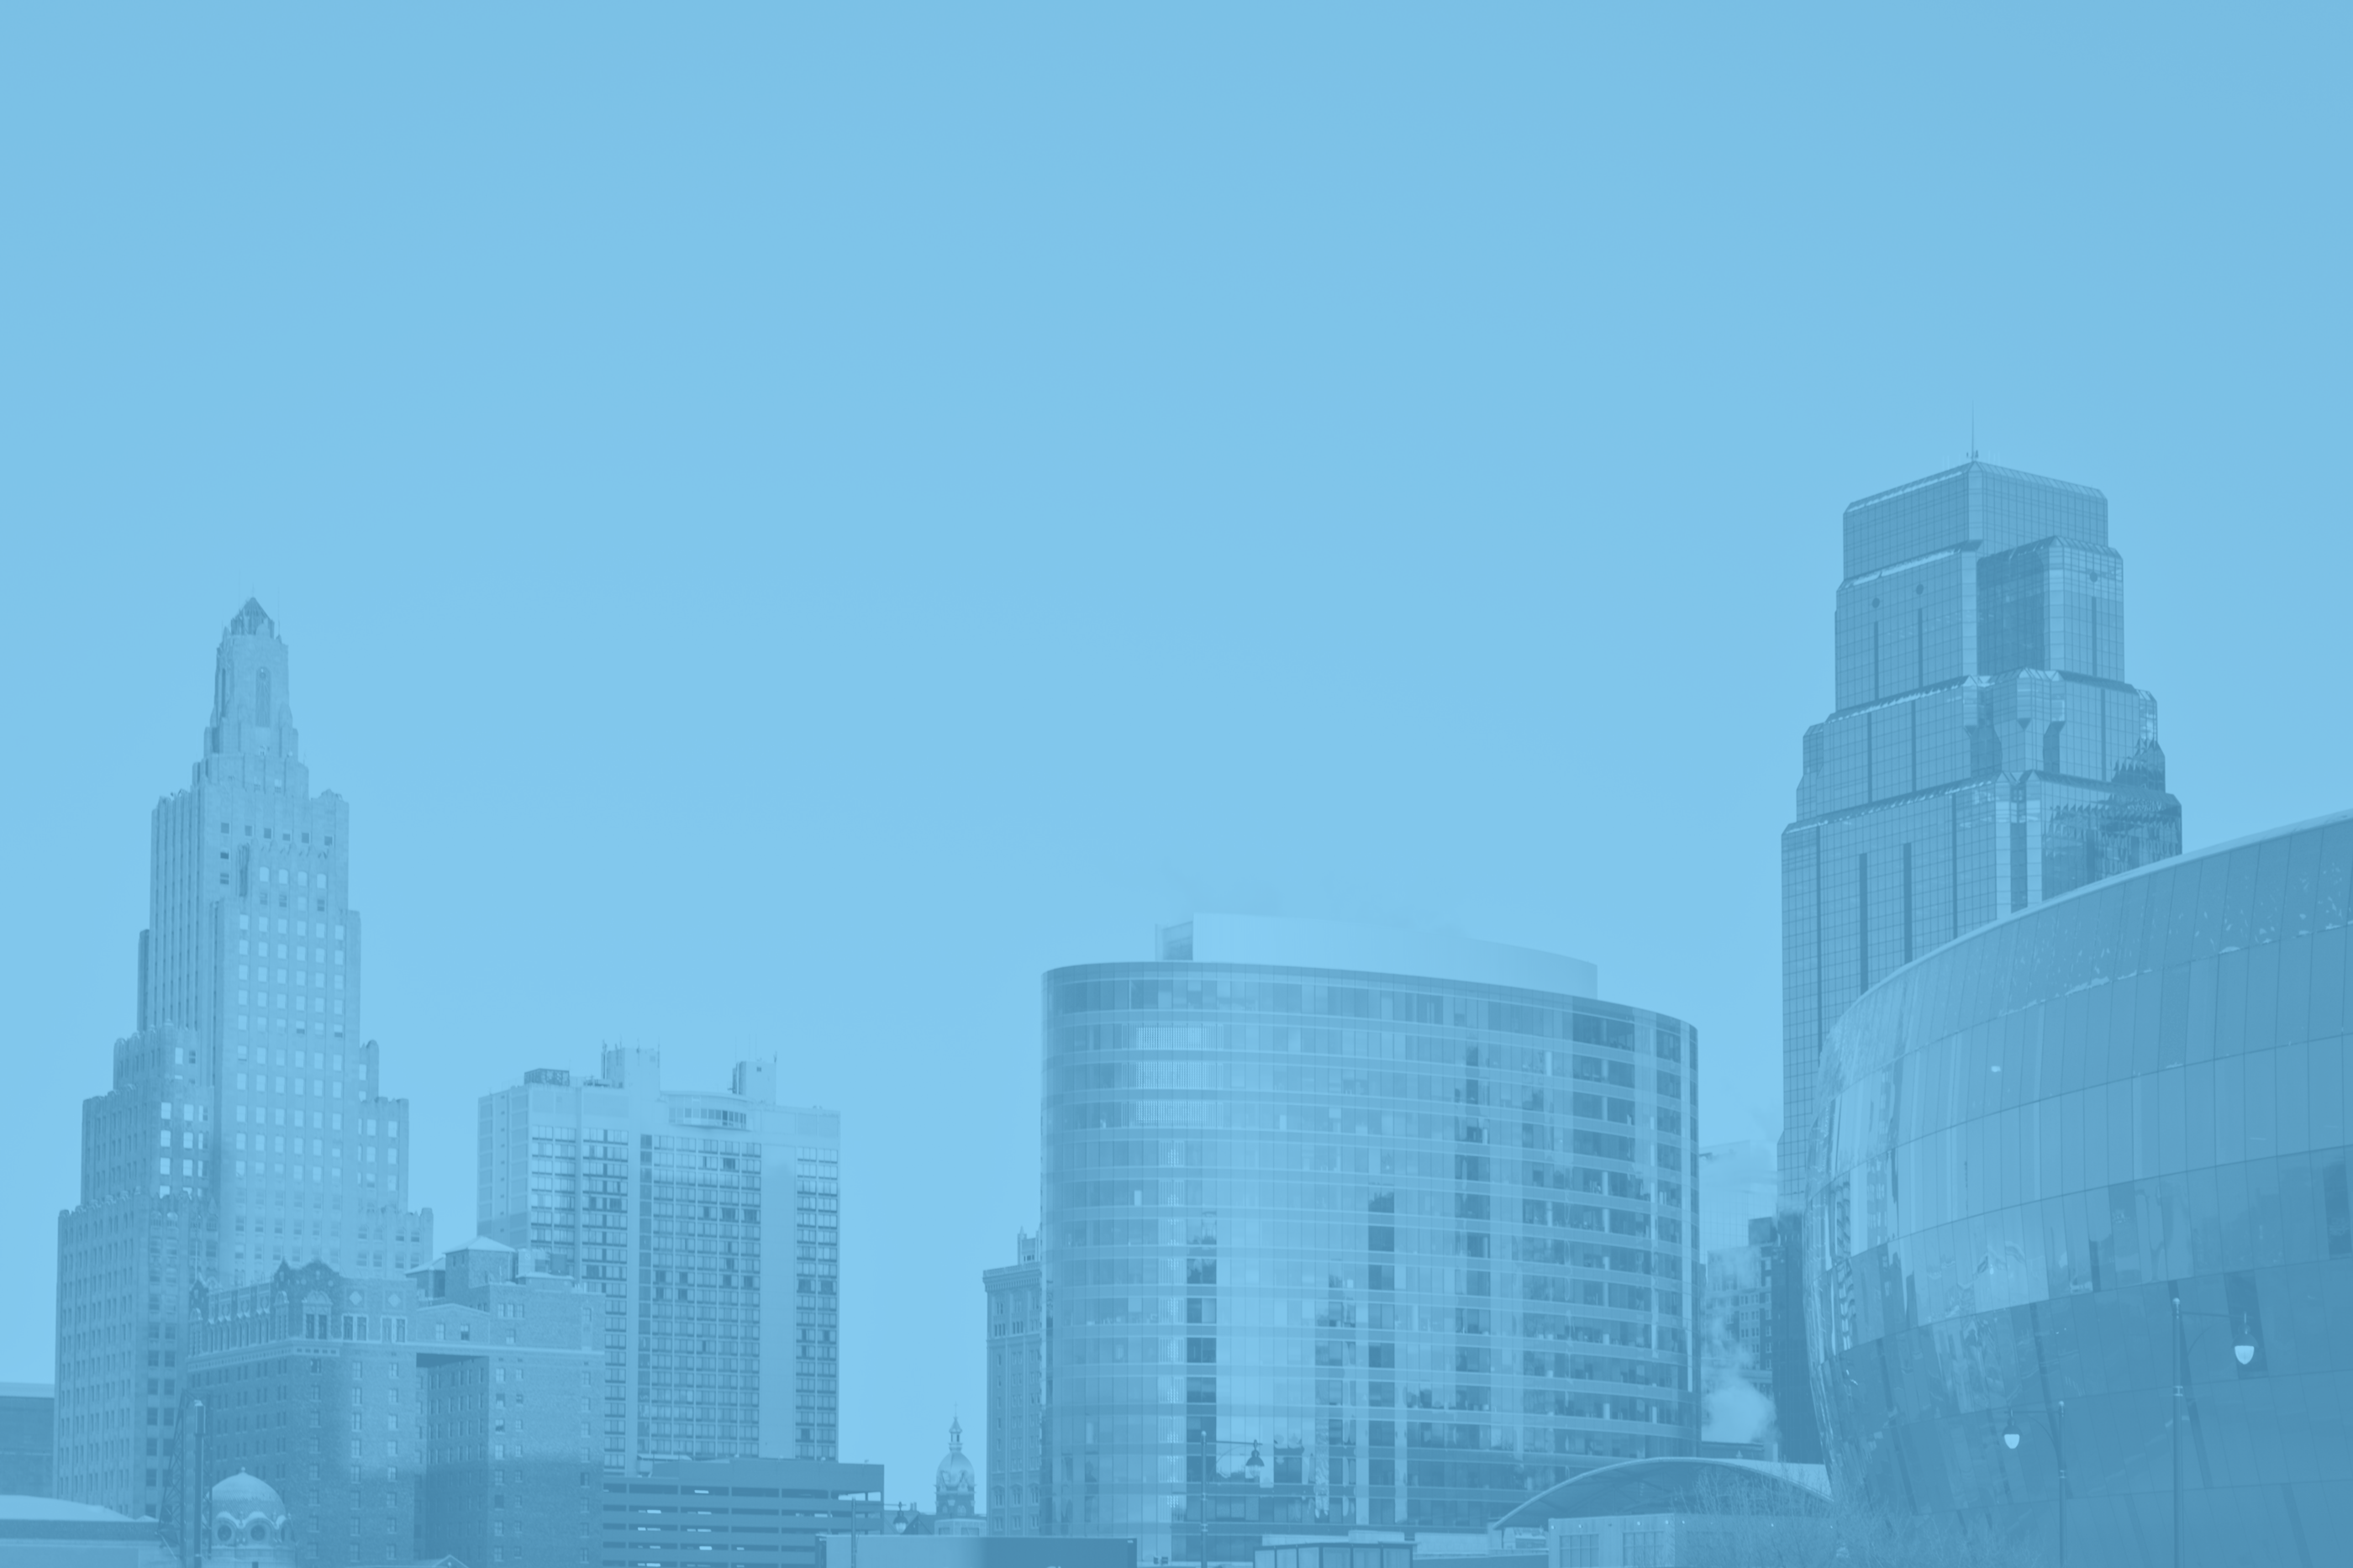 Kansas City skyline with light blue overlay